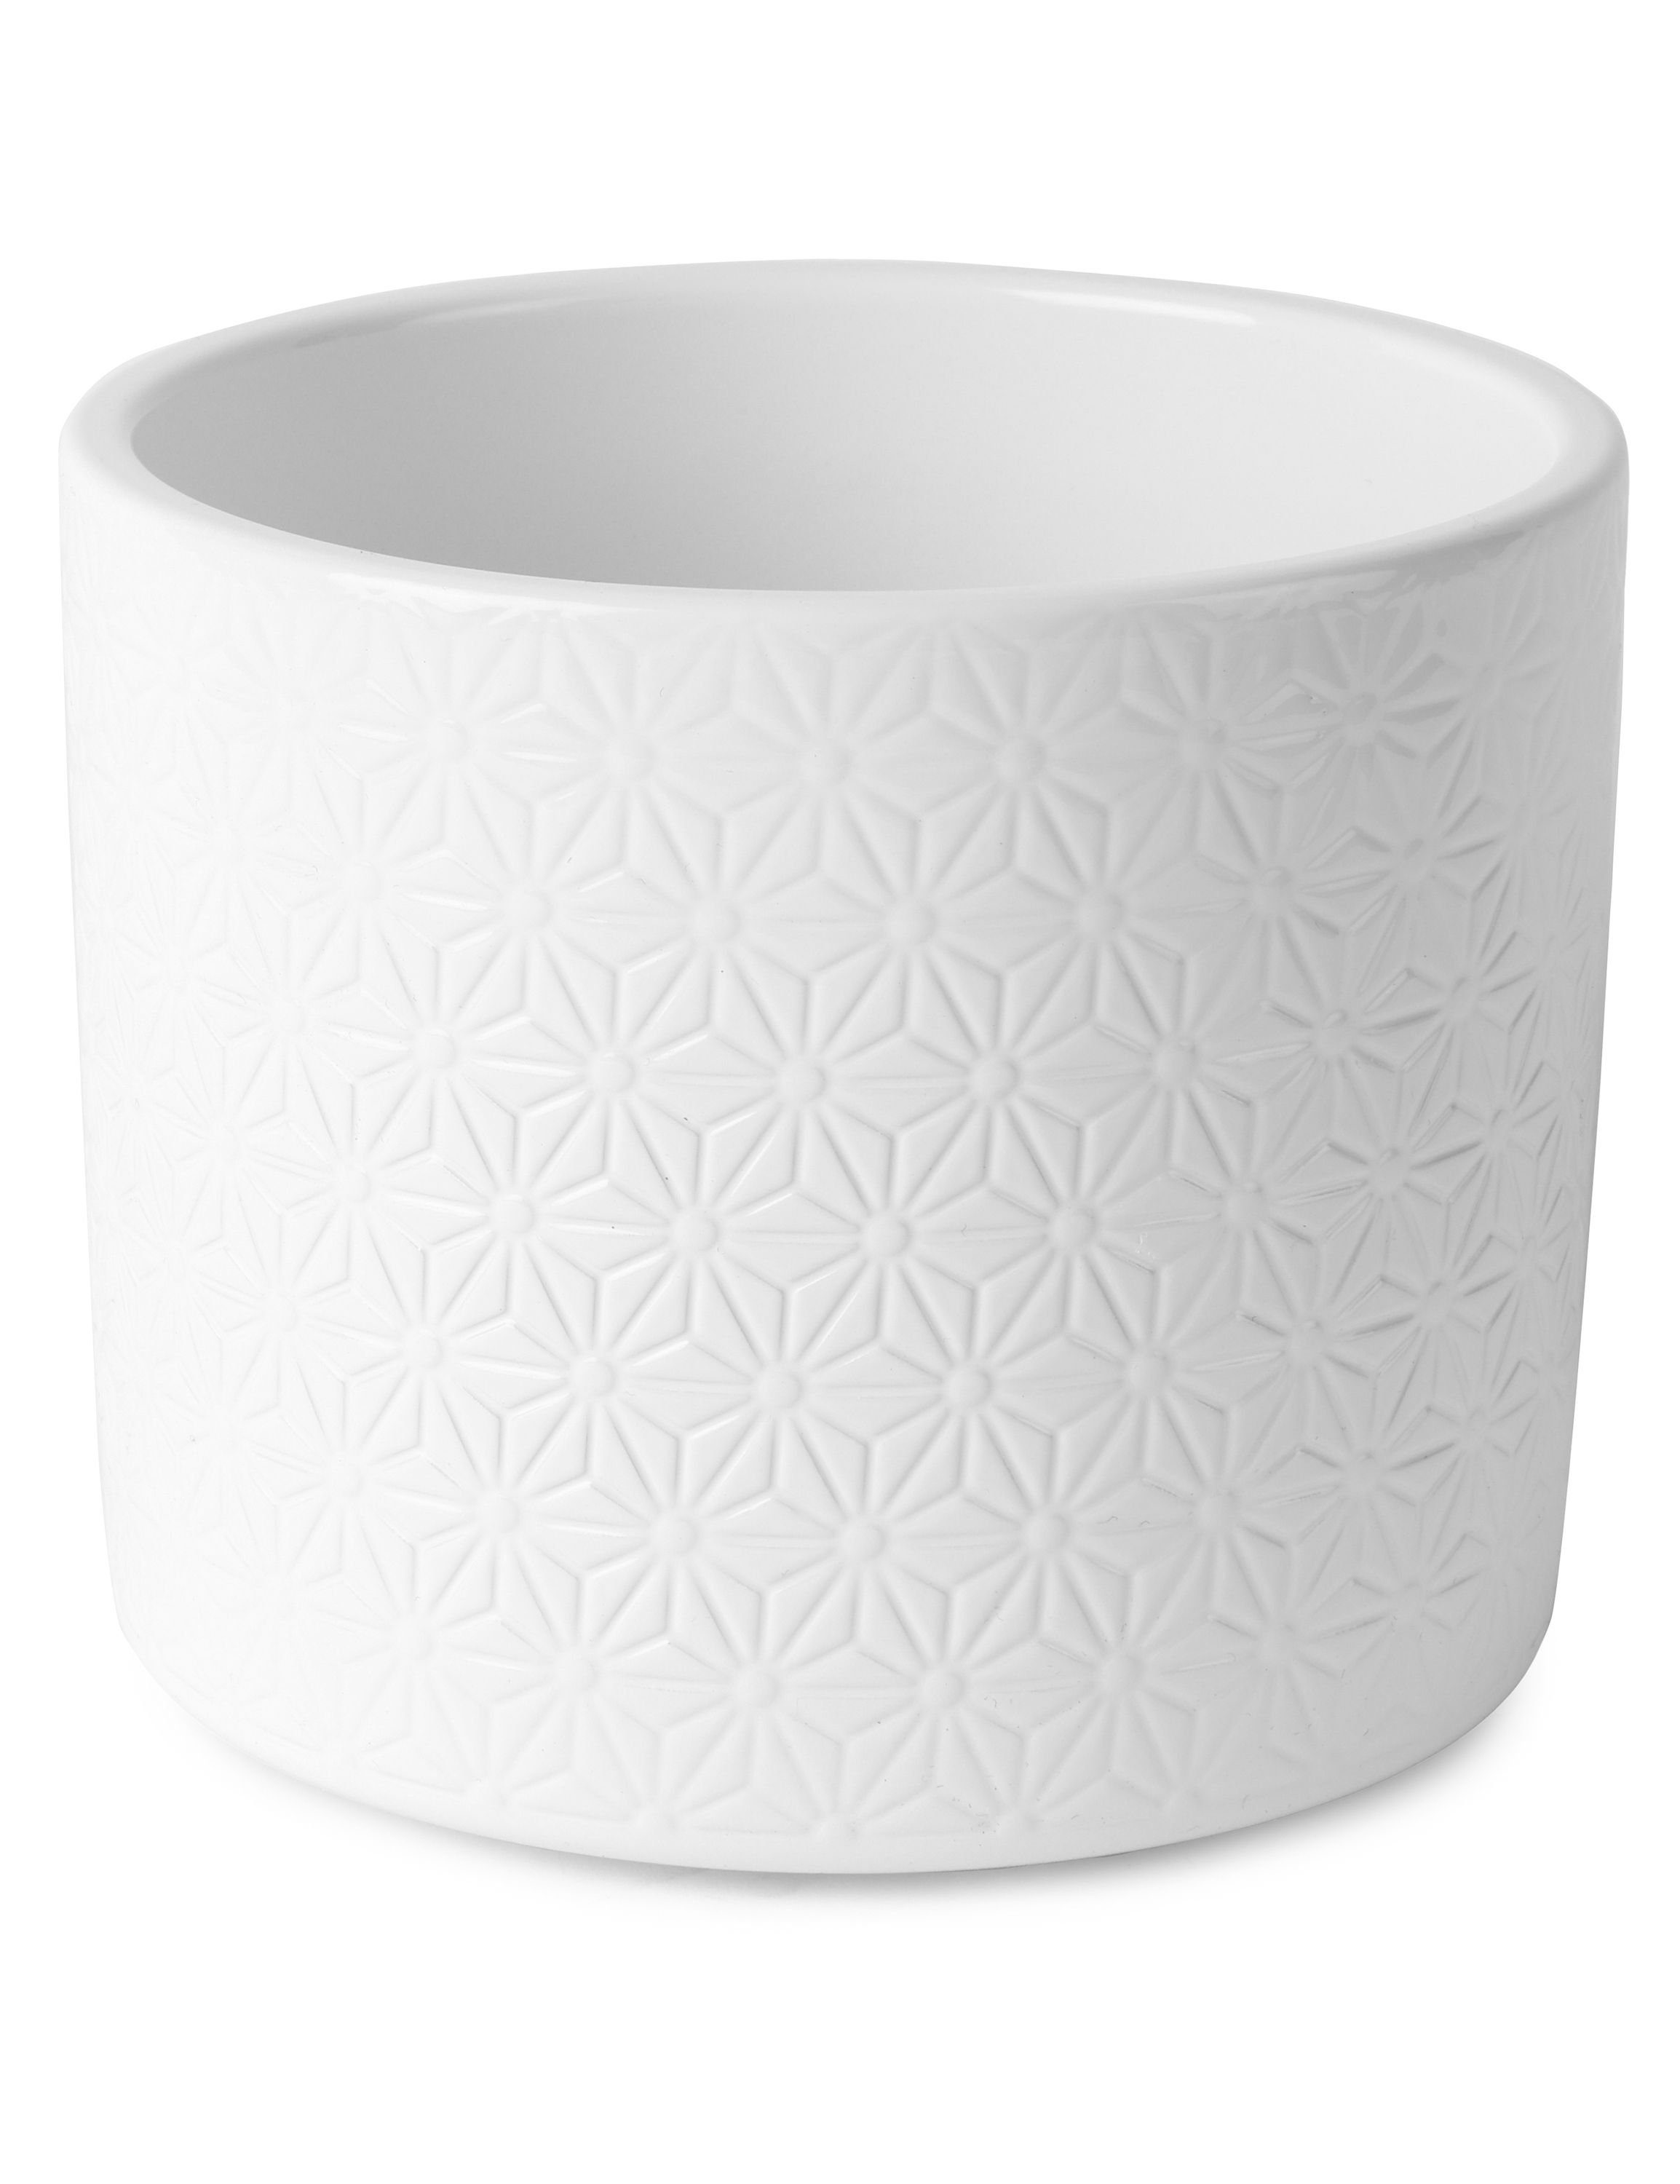 Garronda Blumentopf Keramik Übertopf für Pflanzgefäß mit Blumenmotiv Blumentopf GD-0018 Weiß B